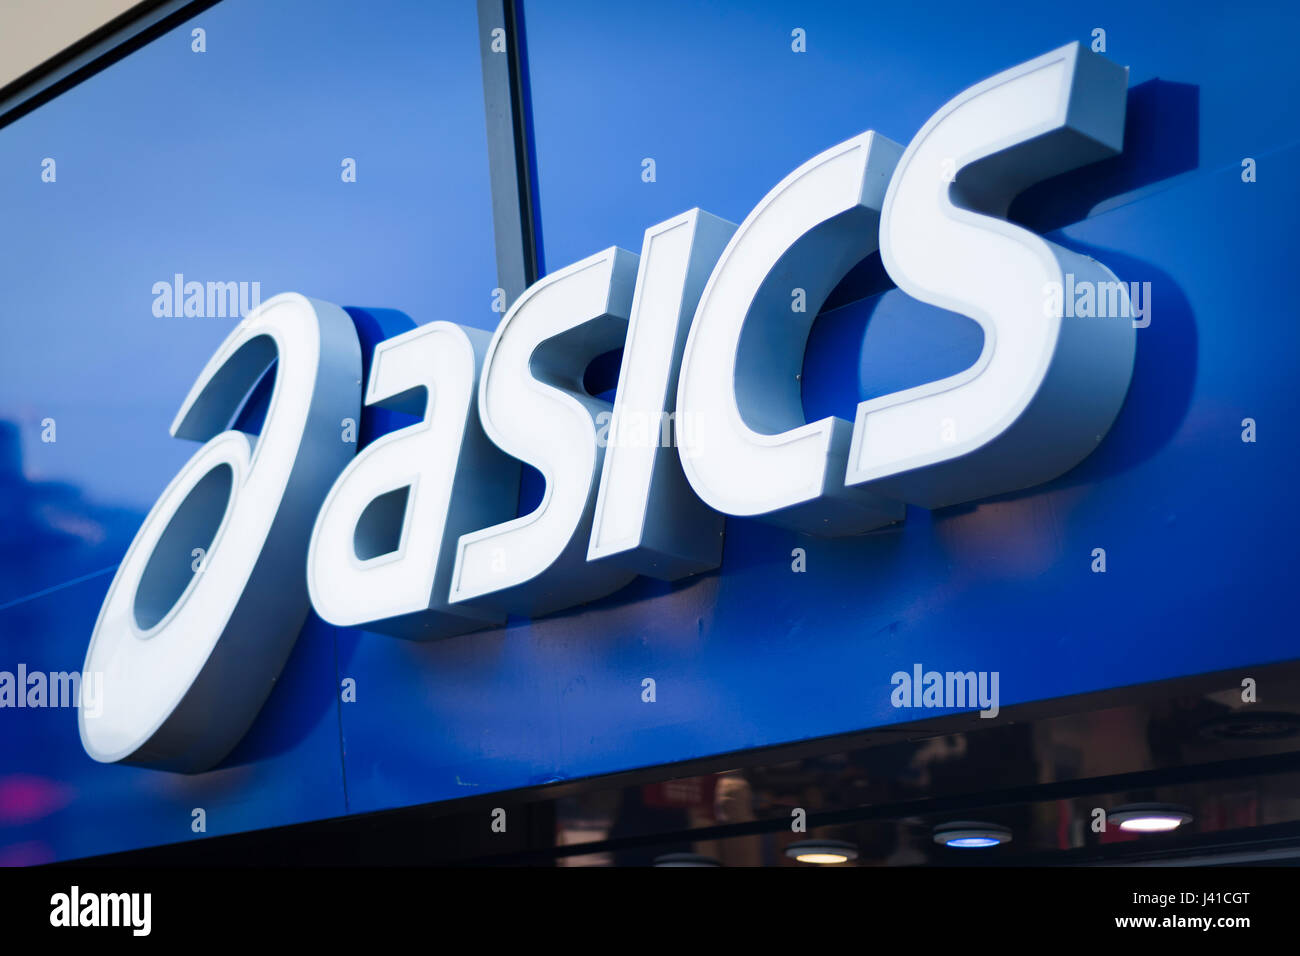 Asics logo sign on building Stock Photo - Alamy